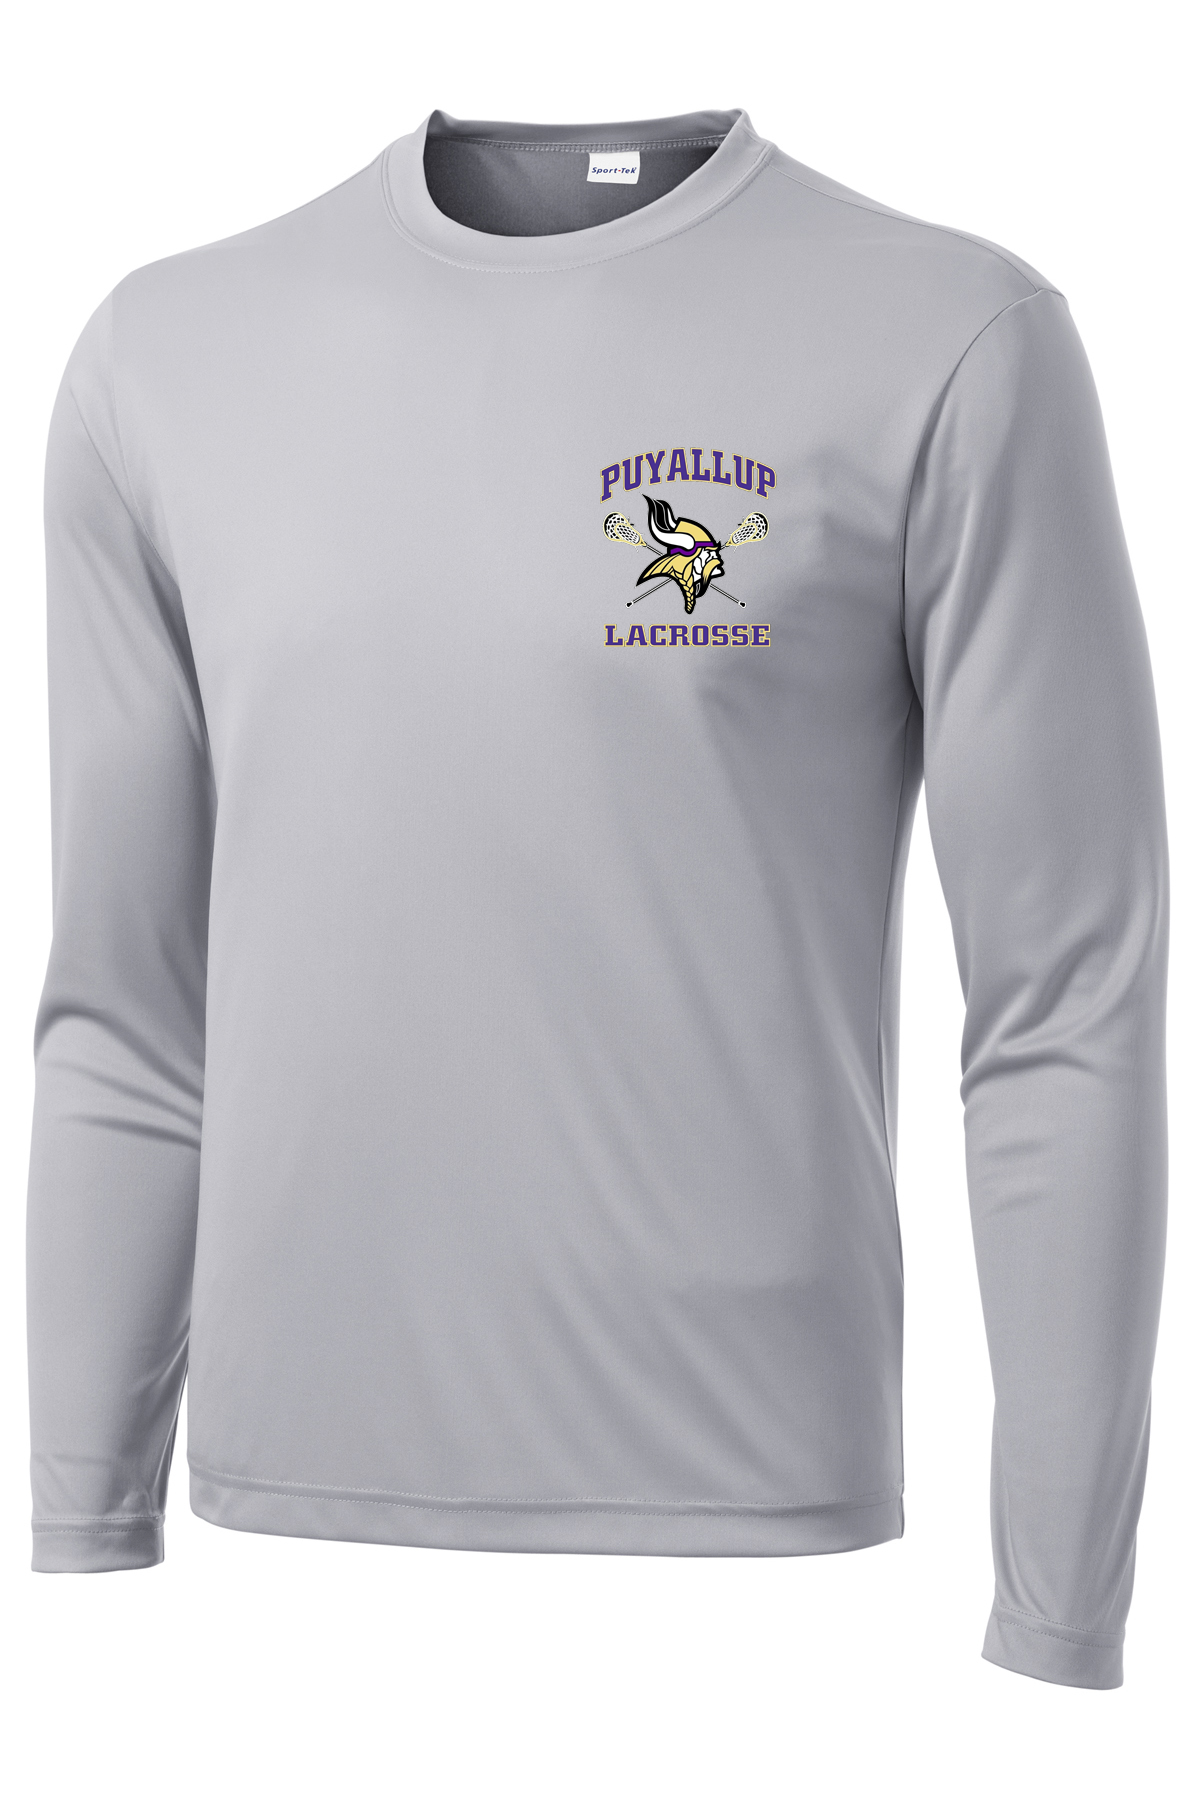 Puyallup Lacrosse Grey Long Sleeve Performance Shirt